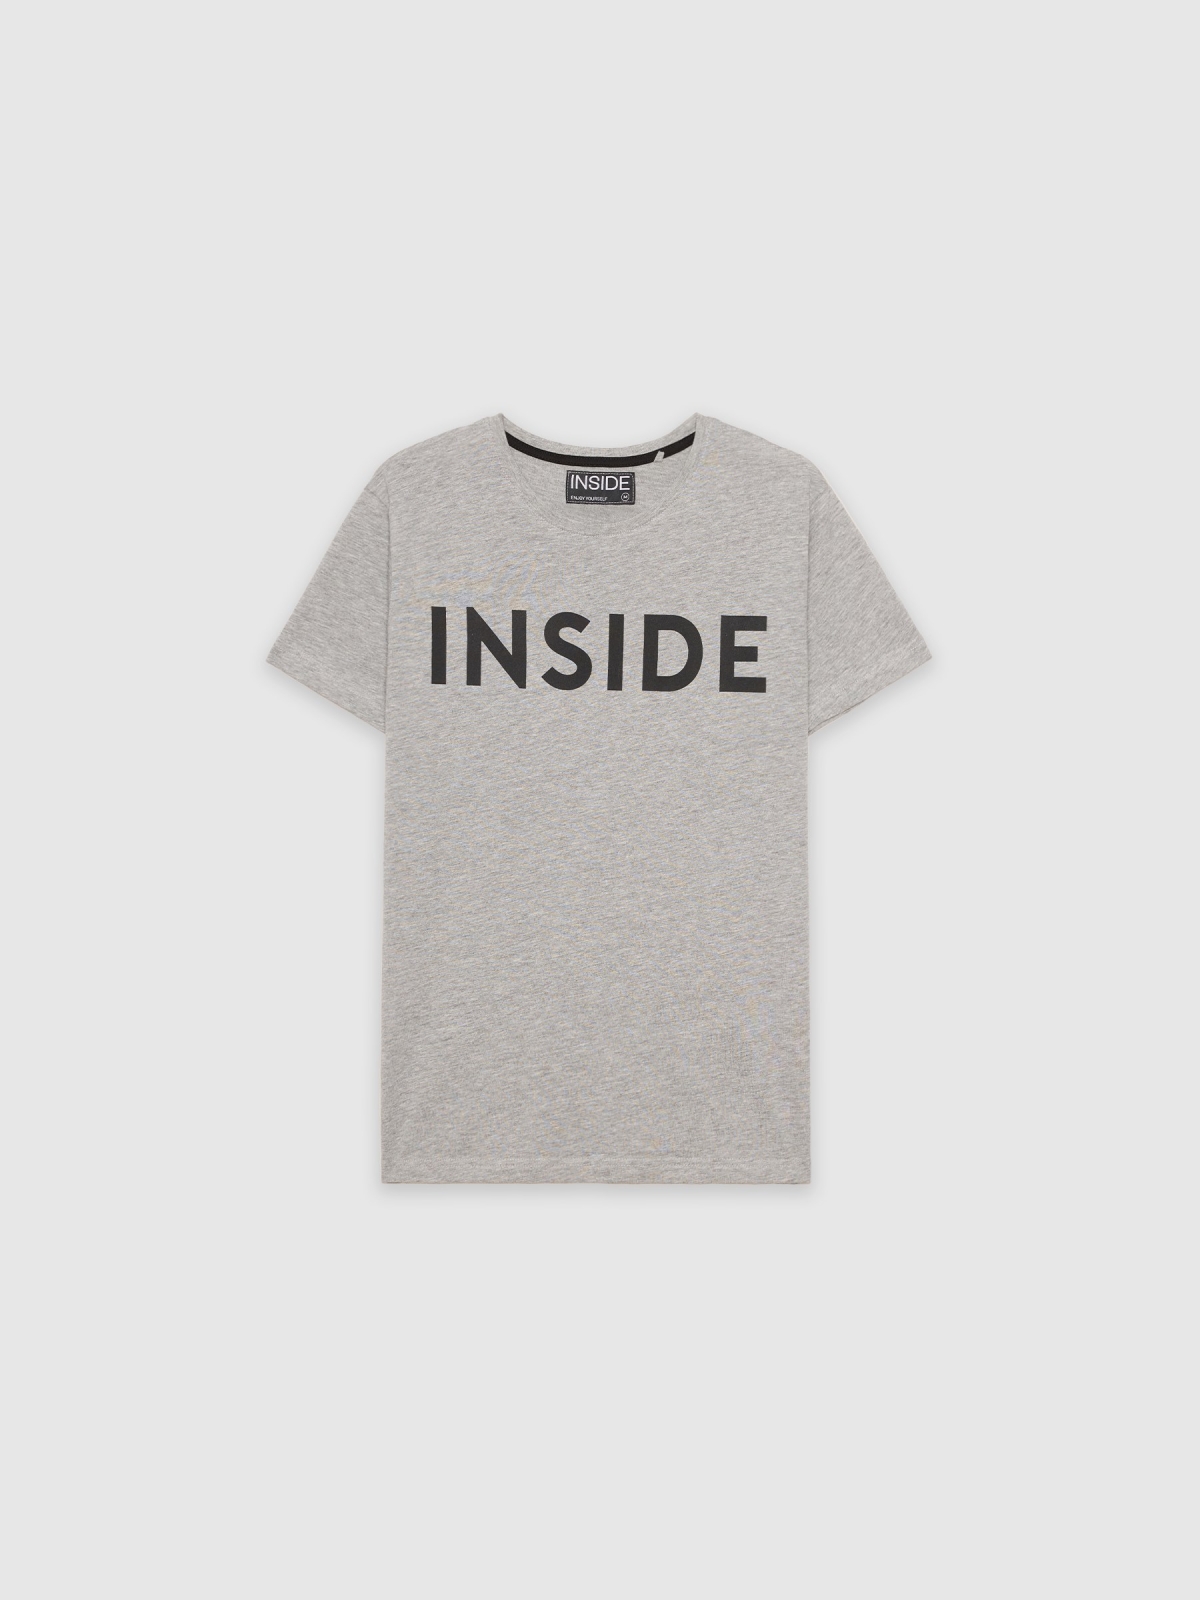  Camiseta básica "INSIDE" melange medio